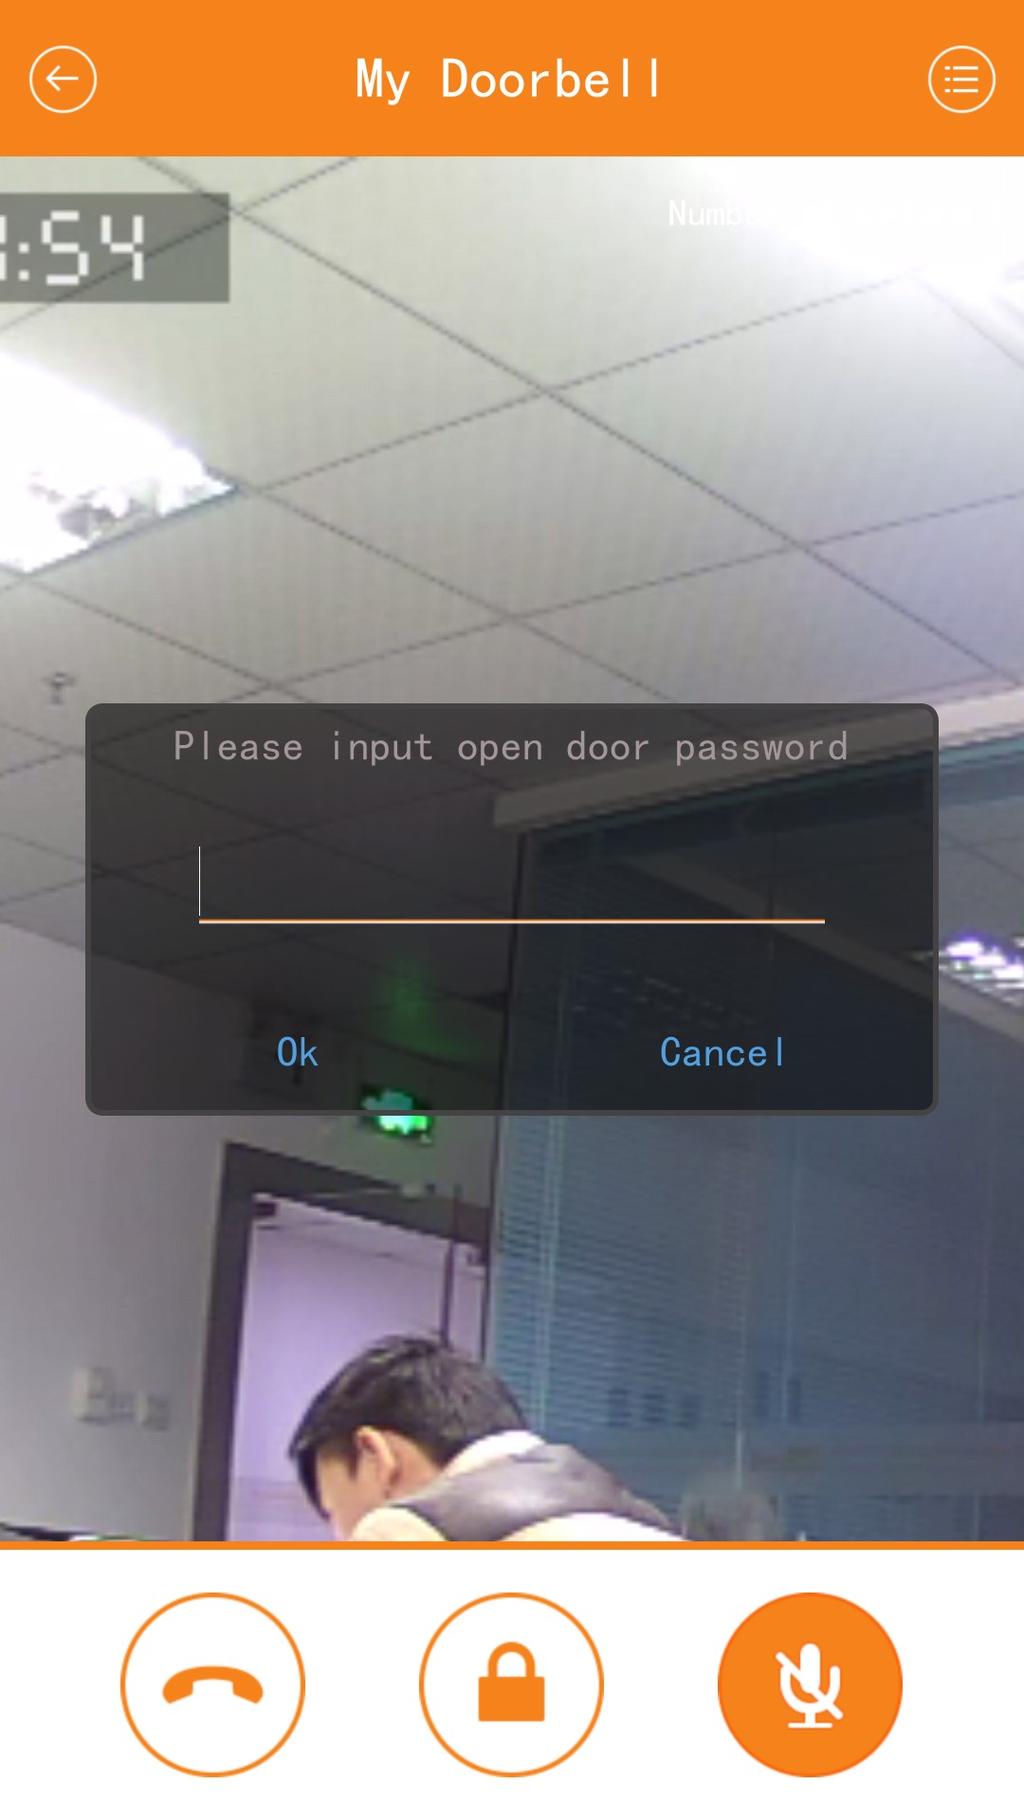 3.5.3.3 Modify the Door unlock password To modify